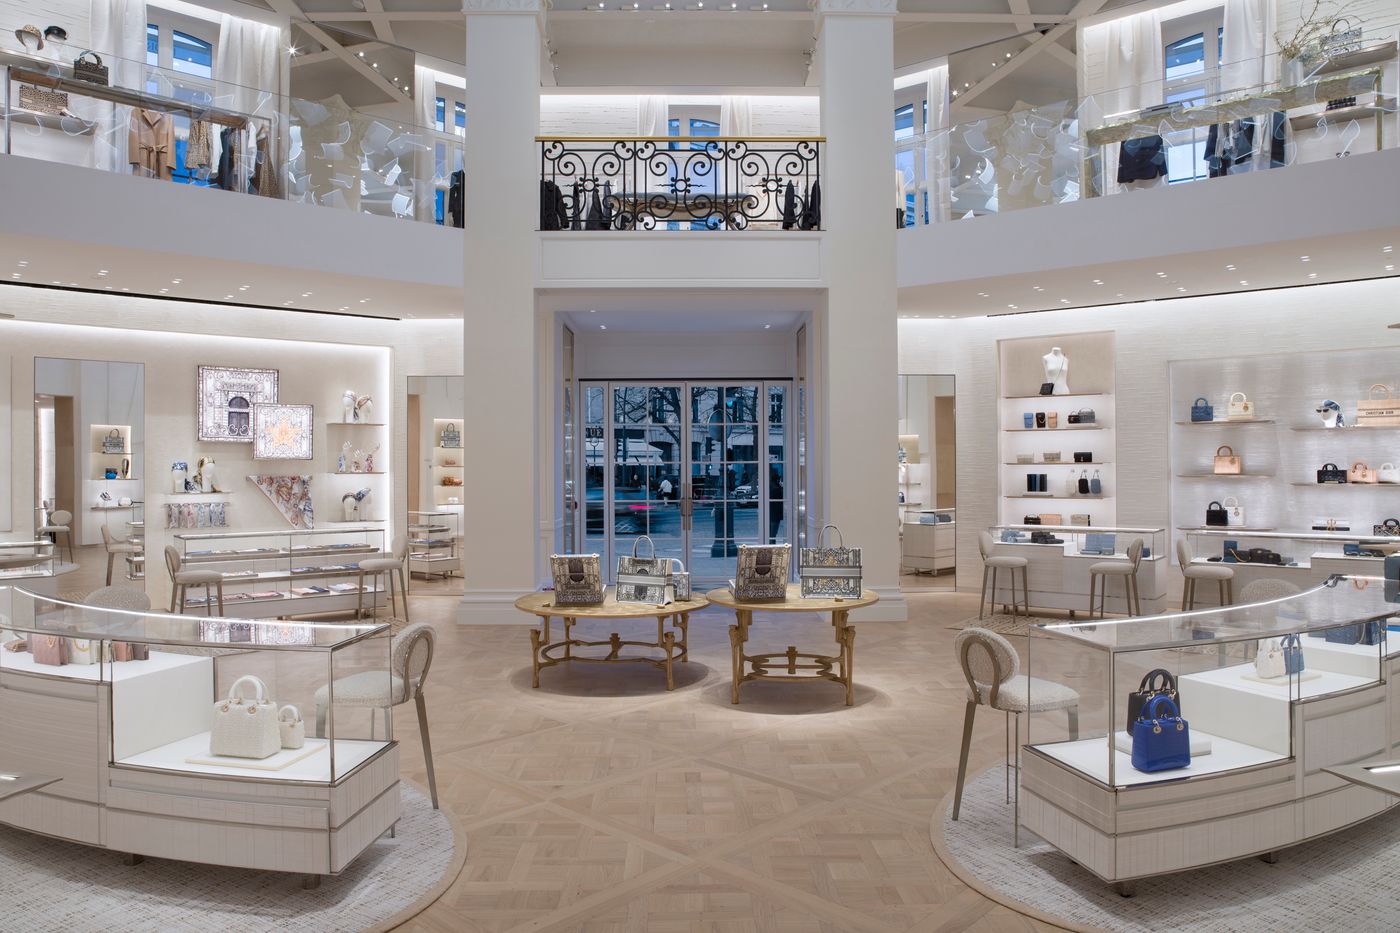 Dior Puts New Focus on Luxury - WSJ